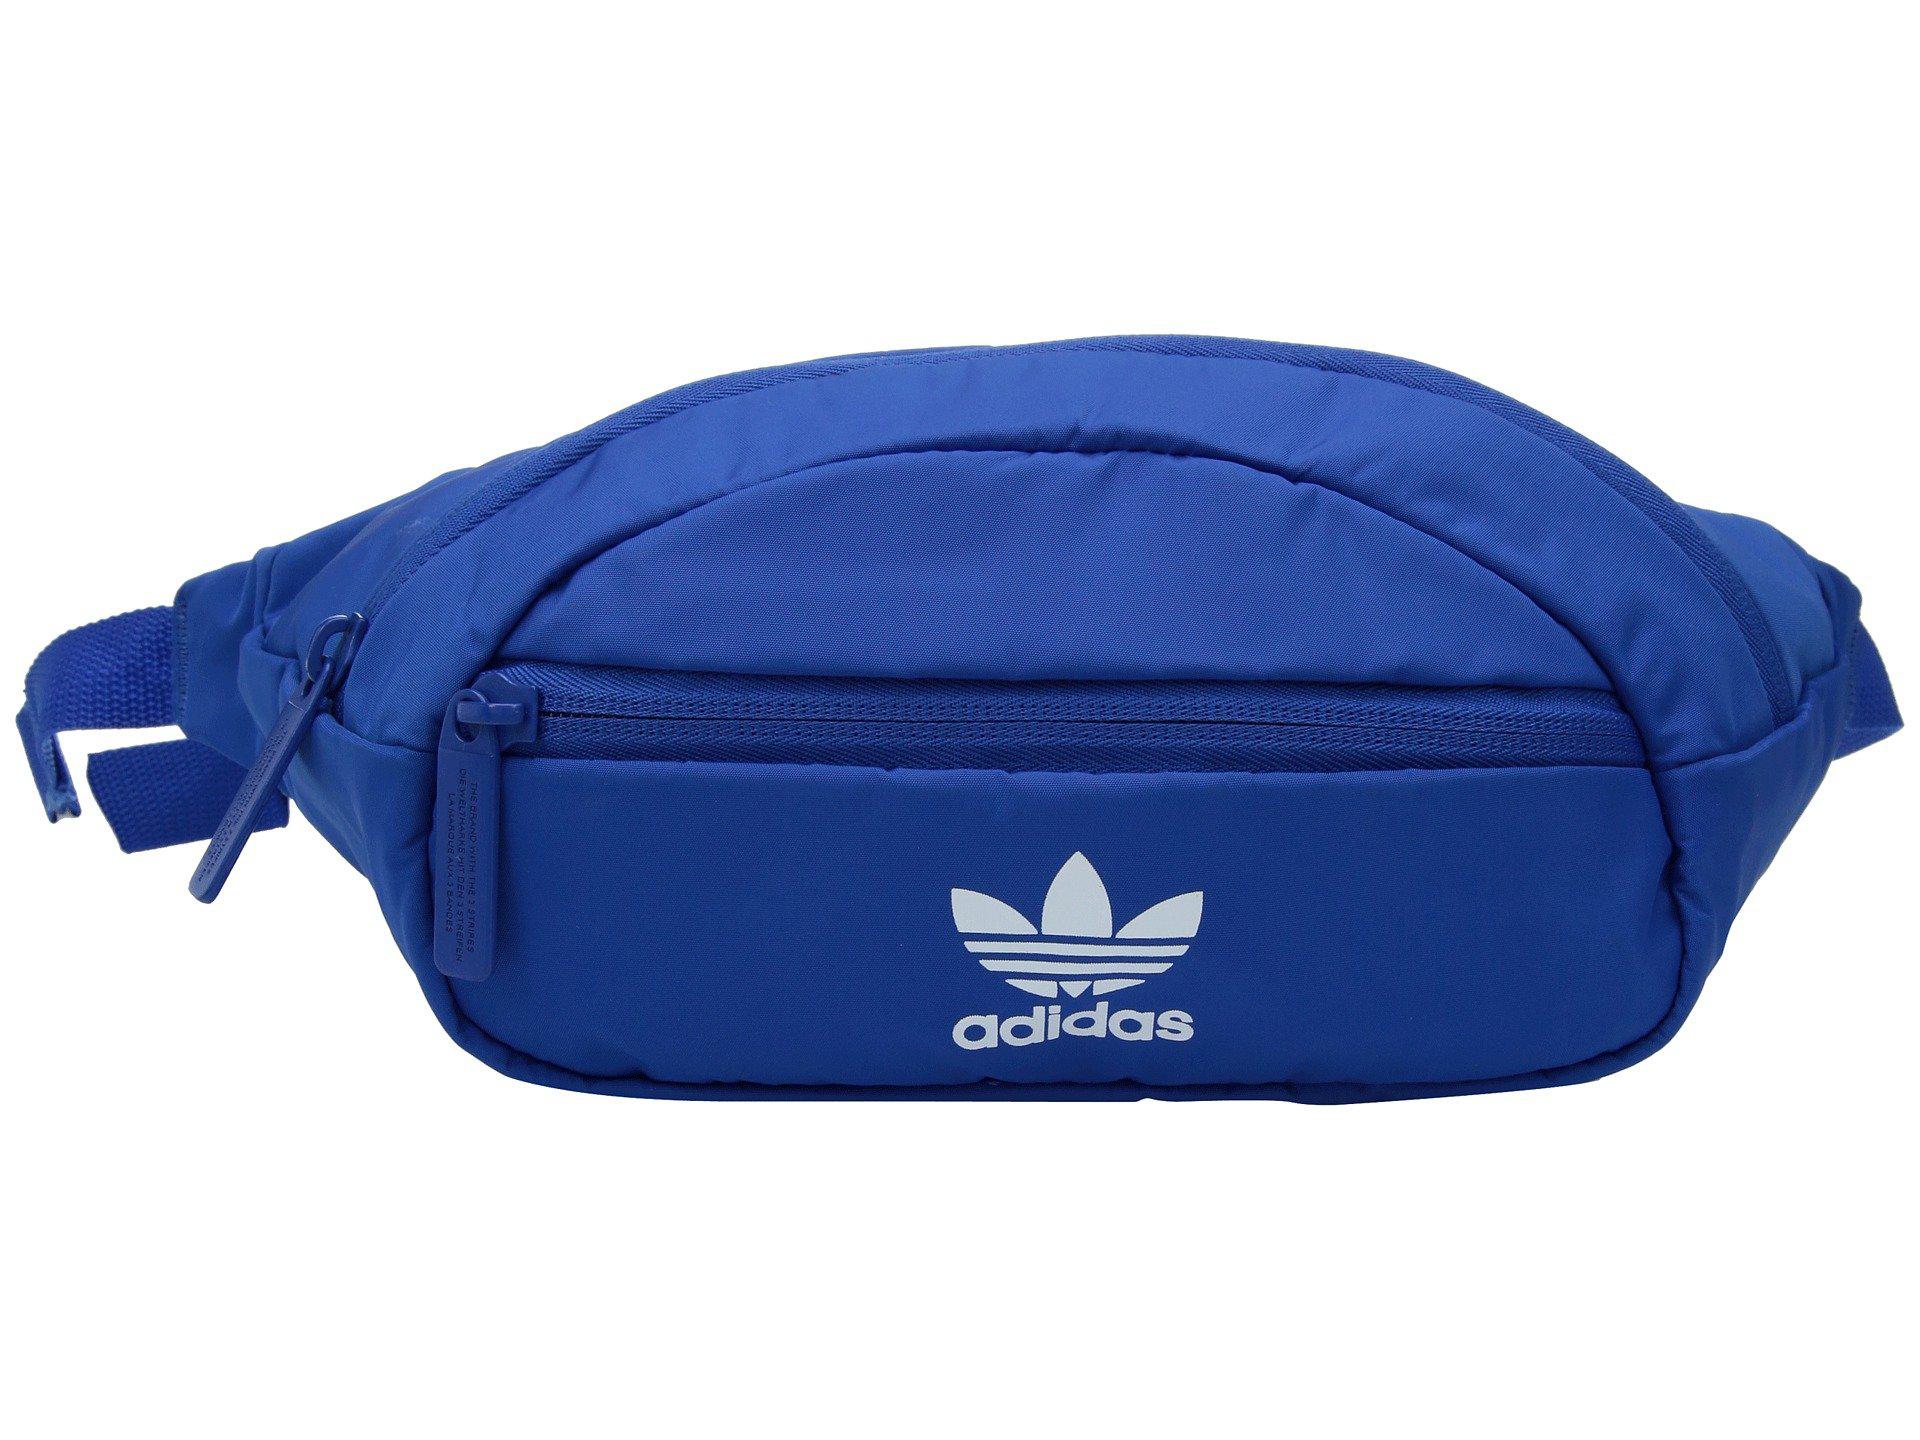 adidas blue fanny pack